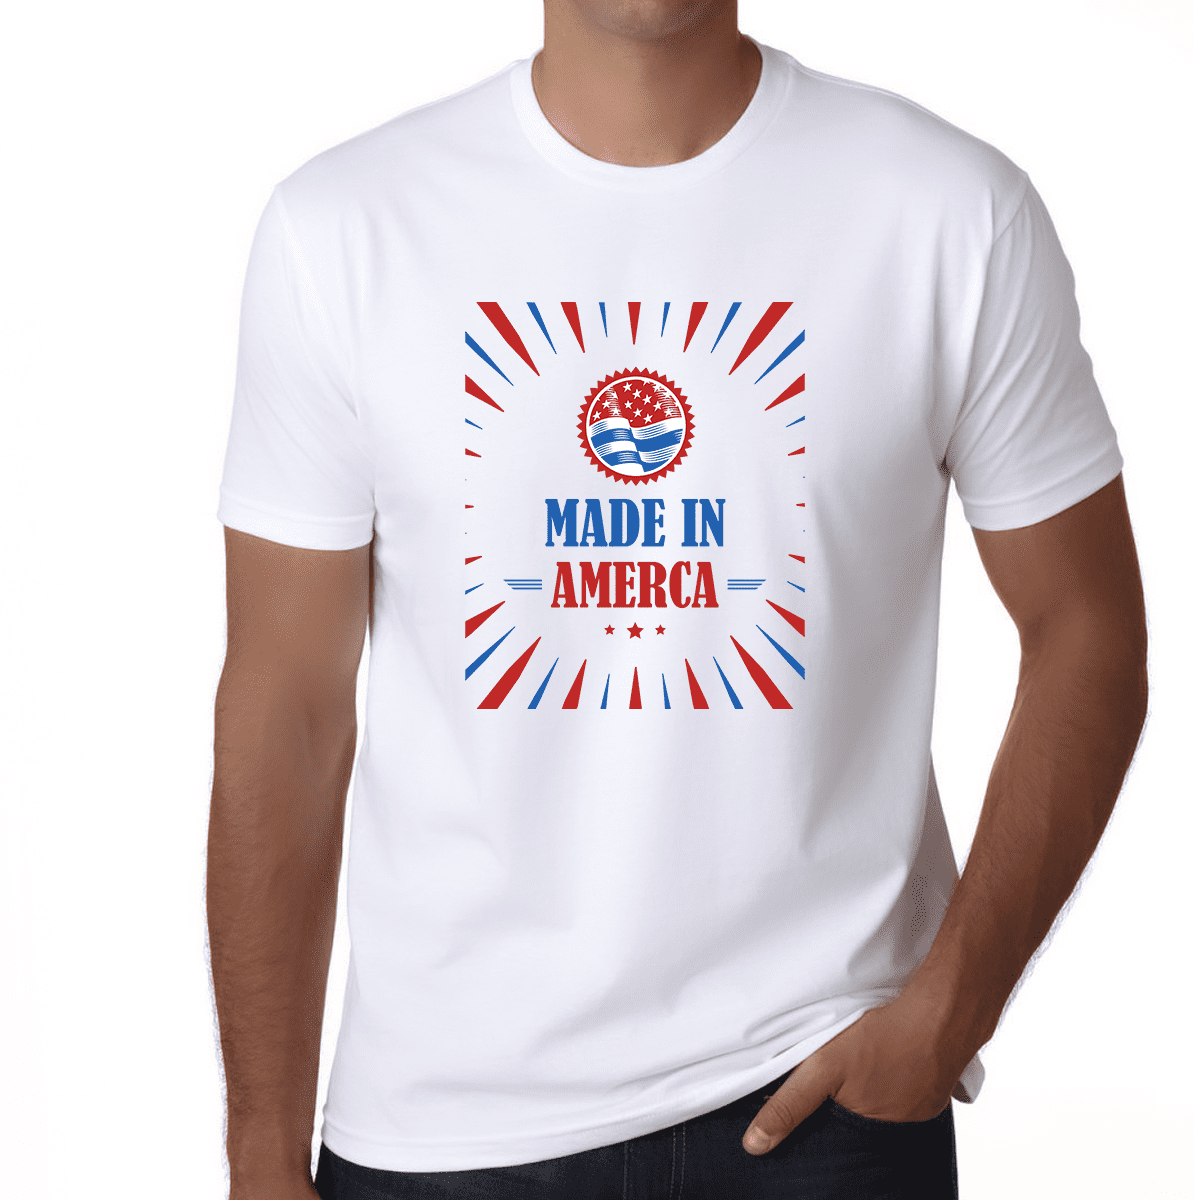 American Vintage Men's T-Shirt